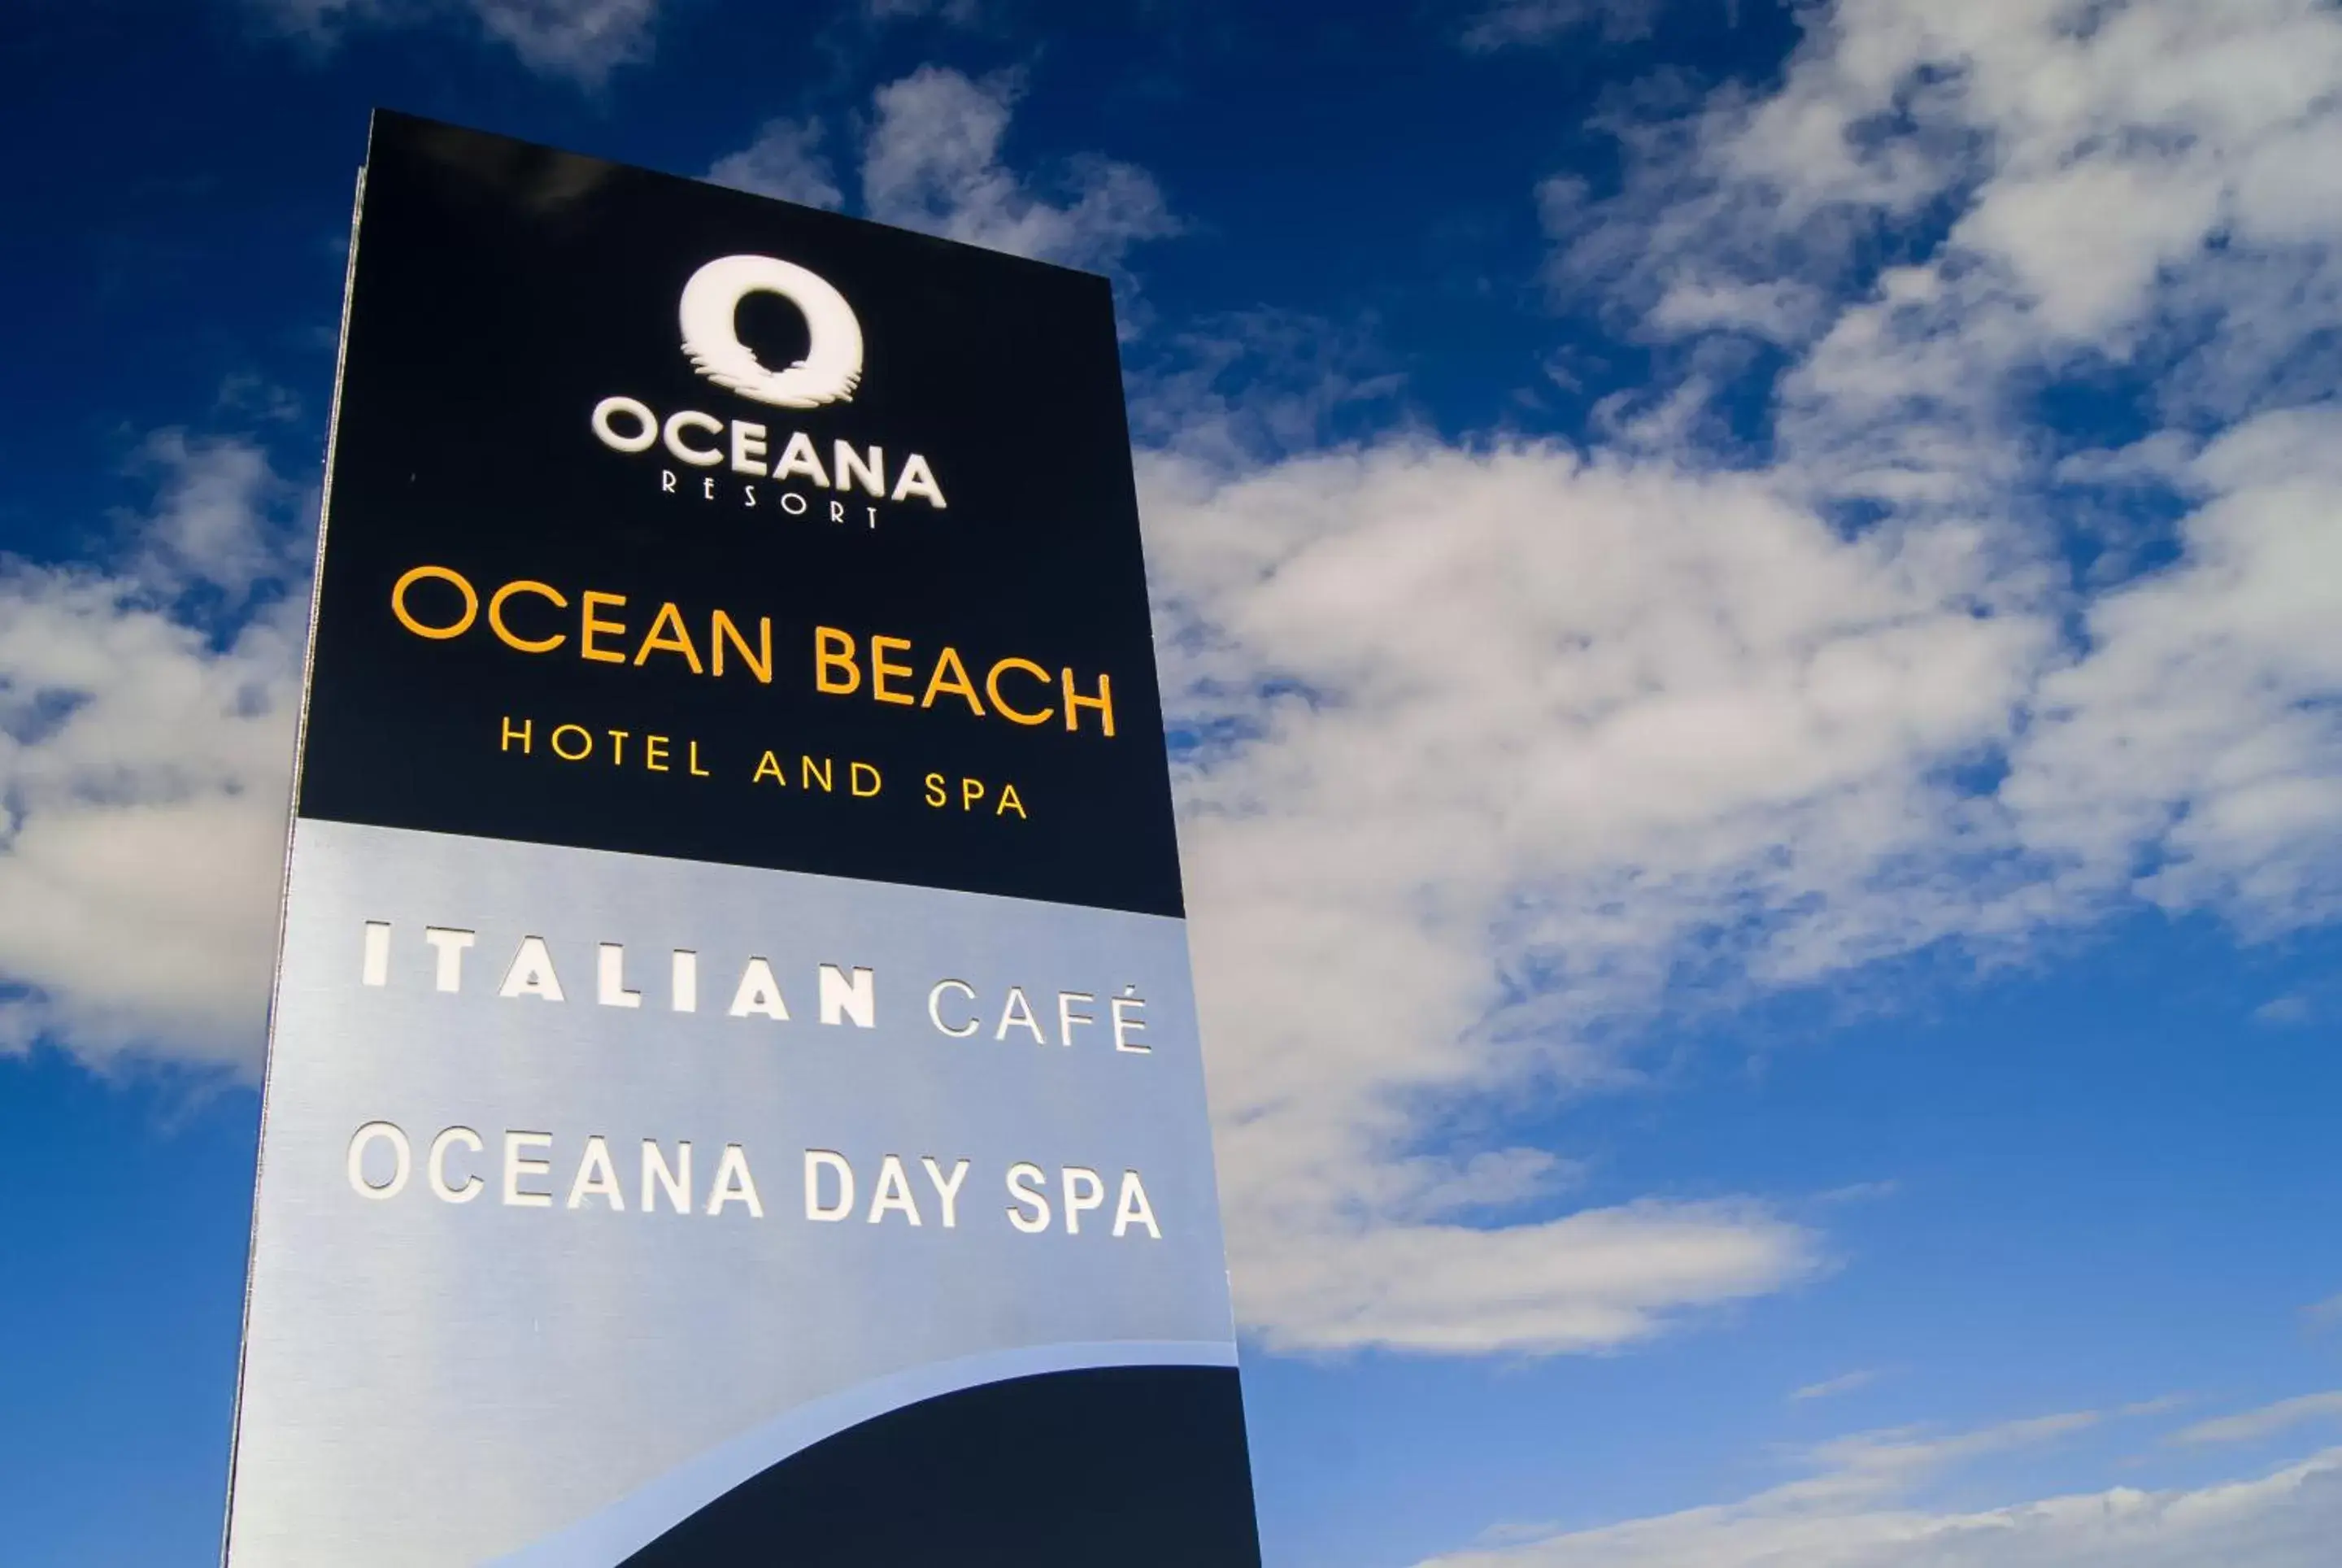 Property logo or sign, Logo/Certificate/Sign/Award in Ocean Beach Hotel & Spa - OCEANA COLLECTION